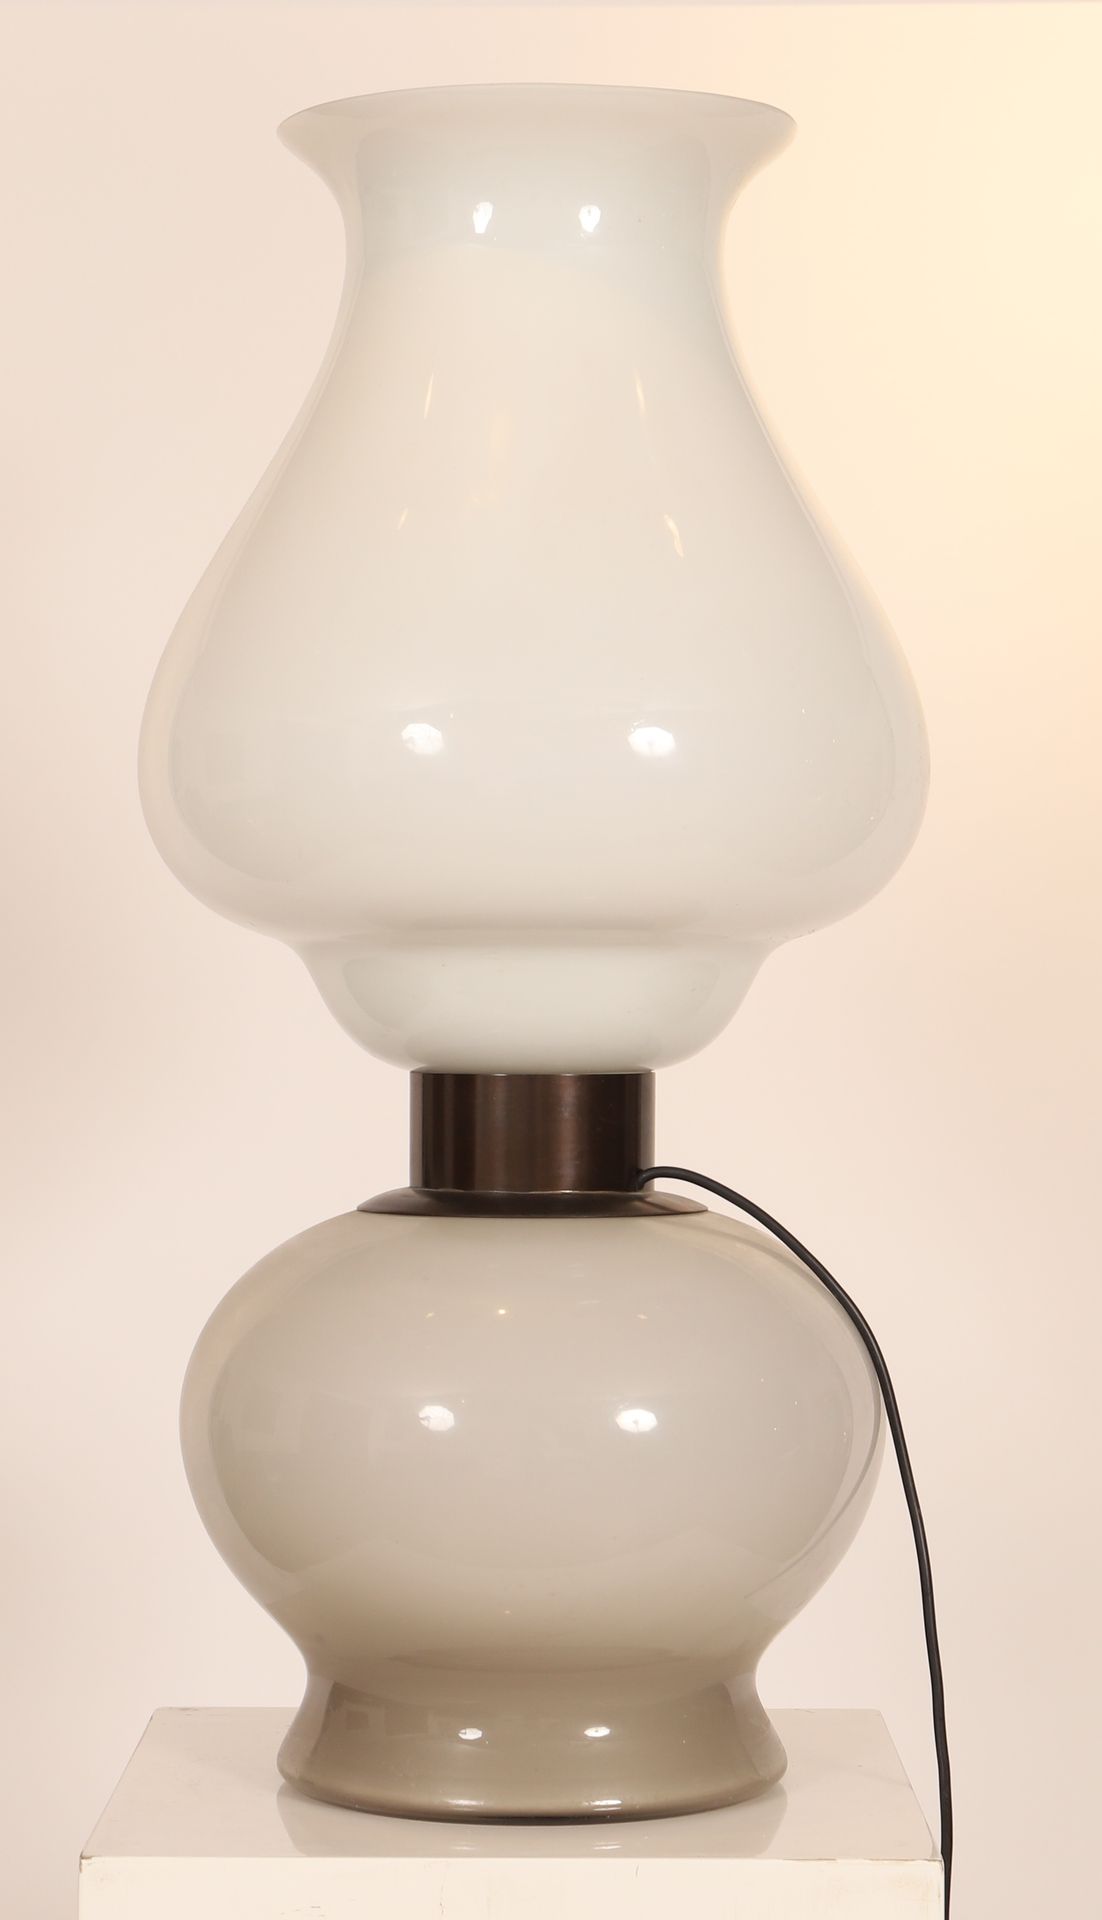 Null Grande lampada opalina bianca e fumé

20° secolo

Dimensioni: H: 84 cm